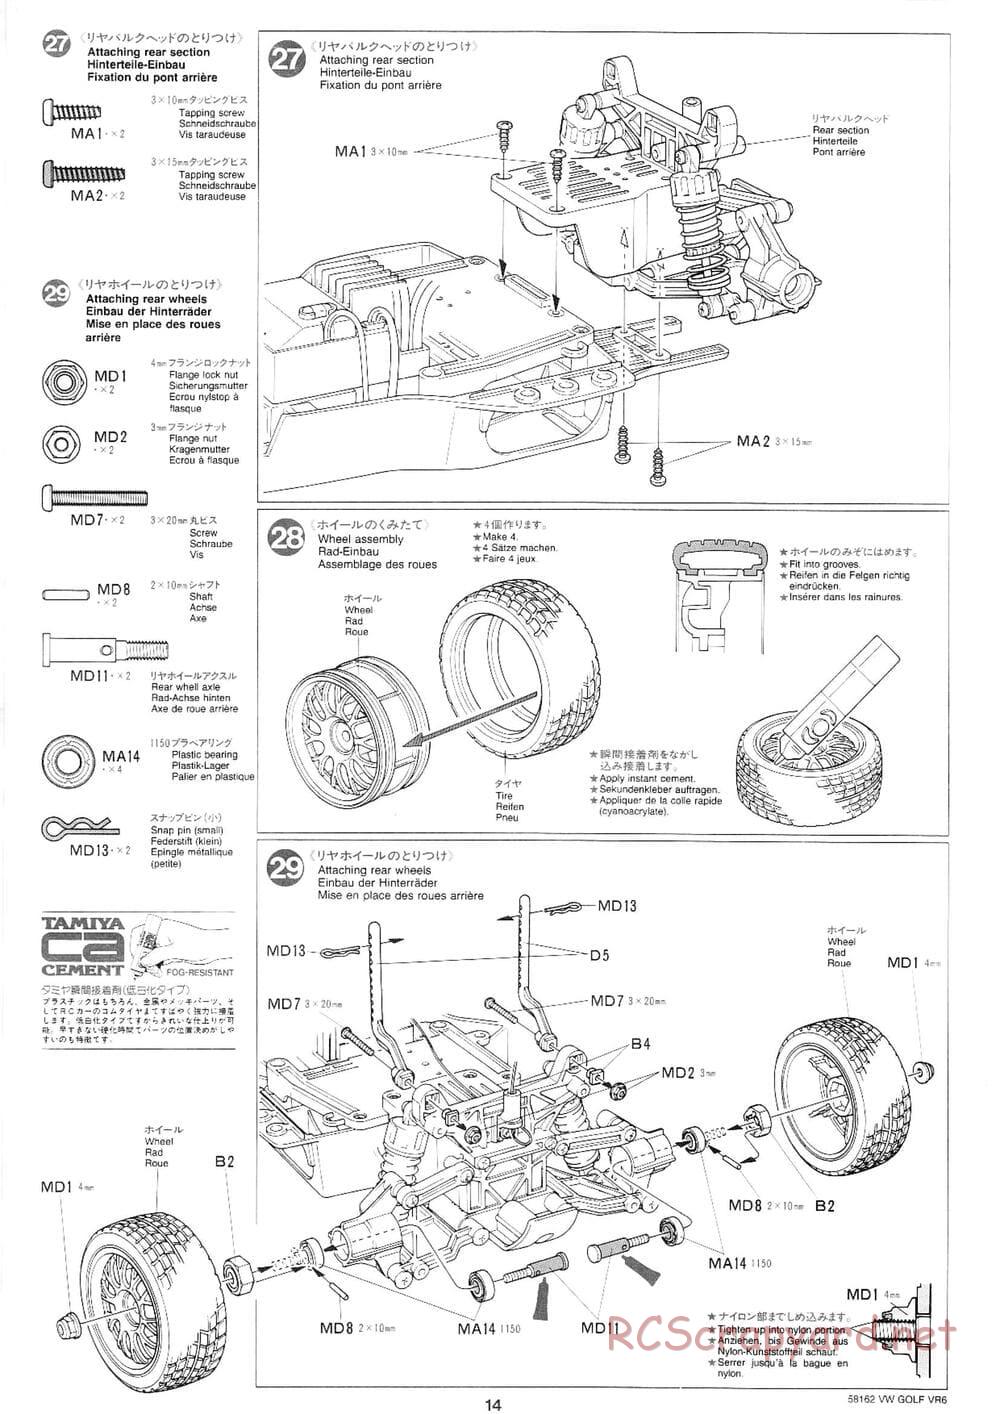 Tamiya - Volkswagen Golf VR6 - FF-01 Chassis - Manual - Page 14